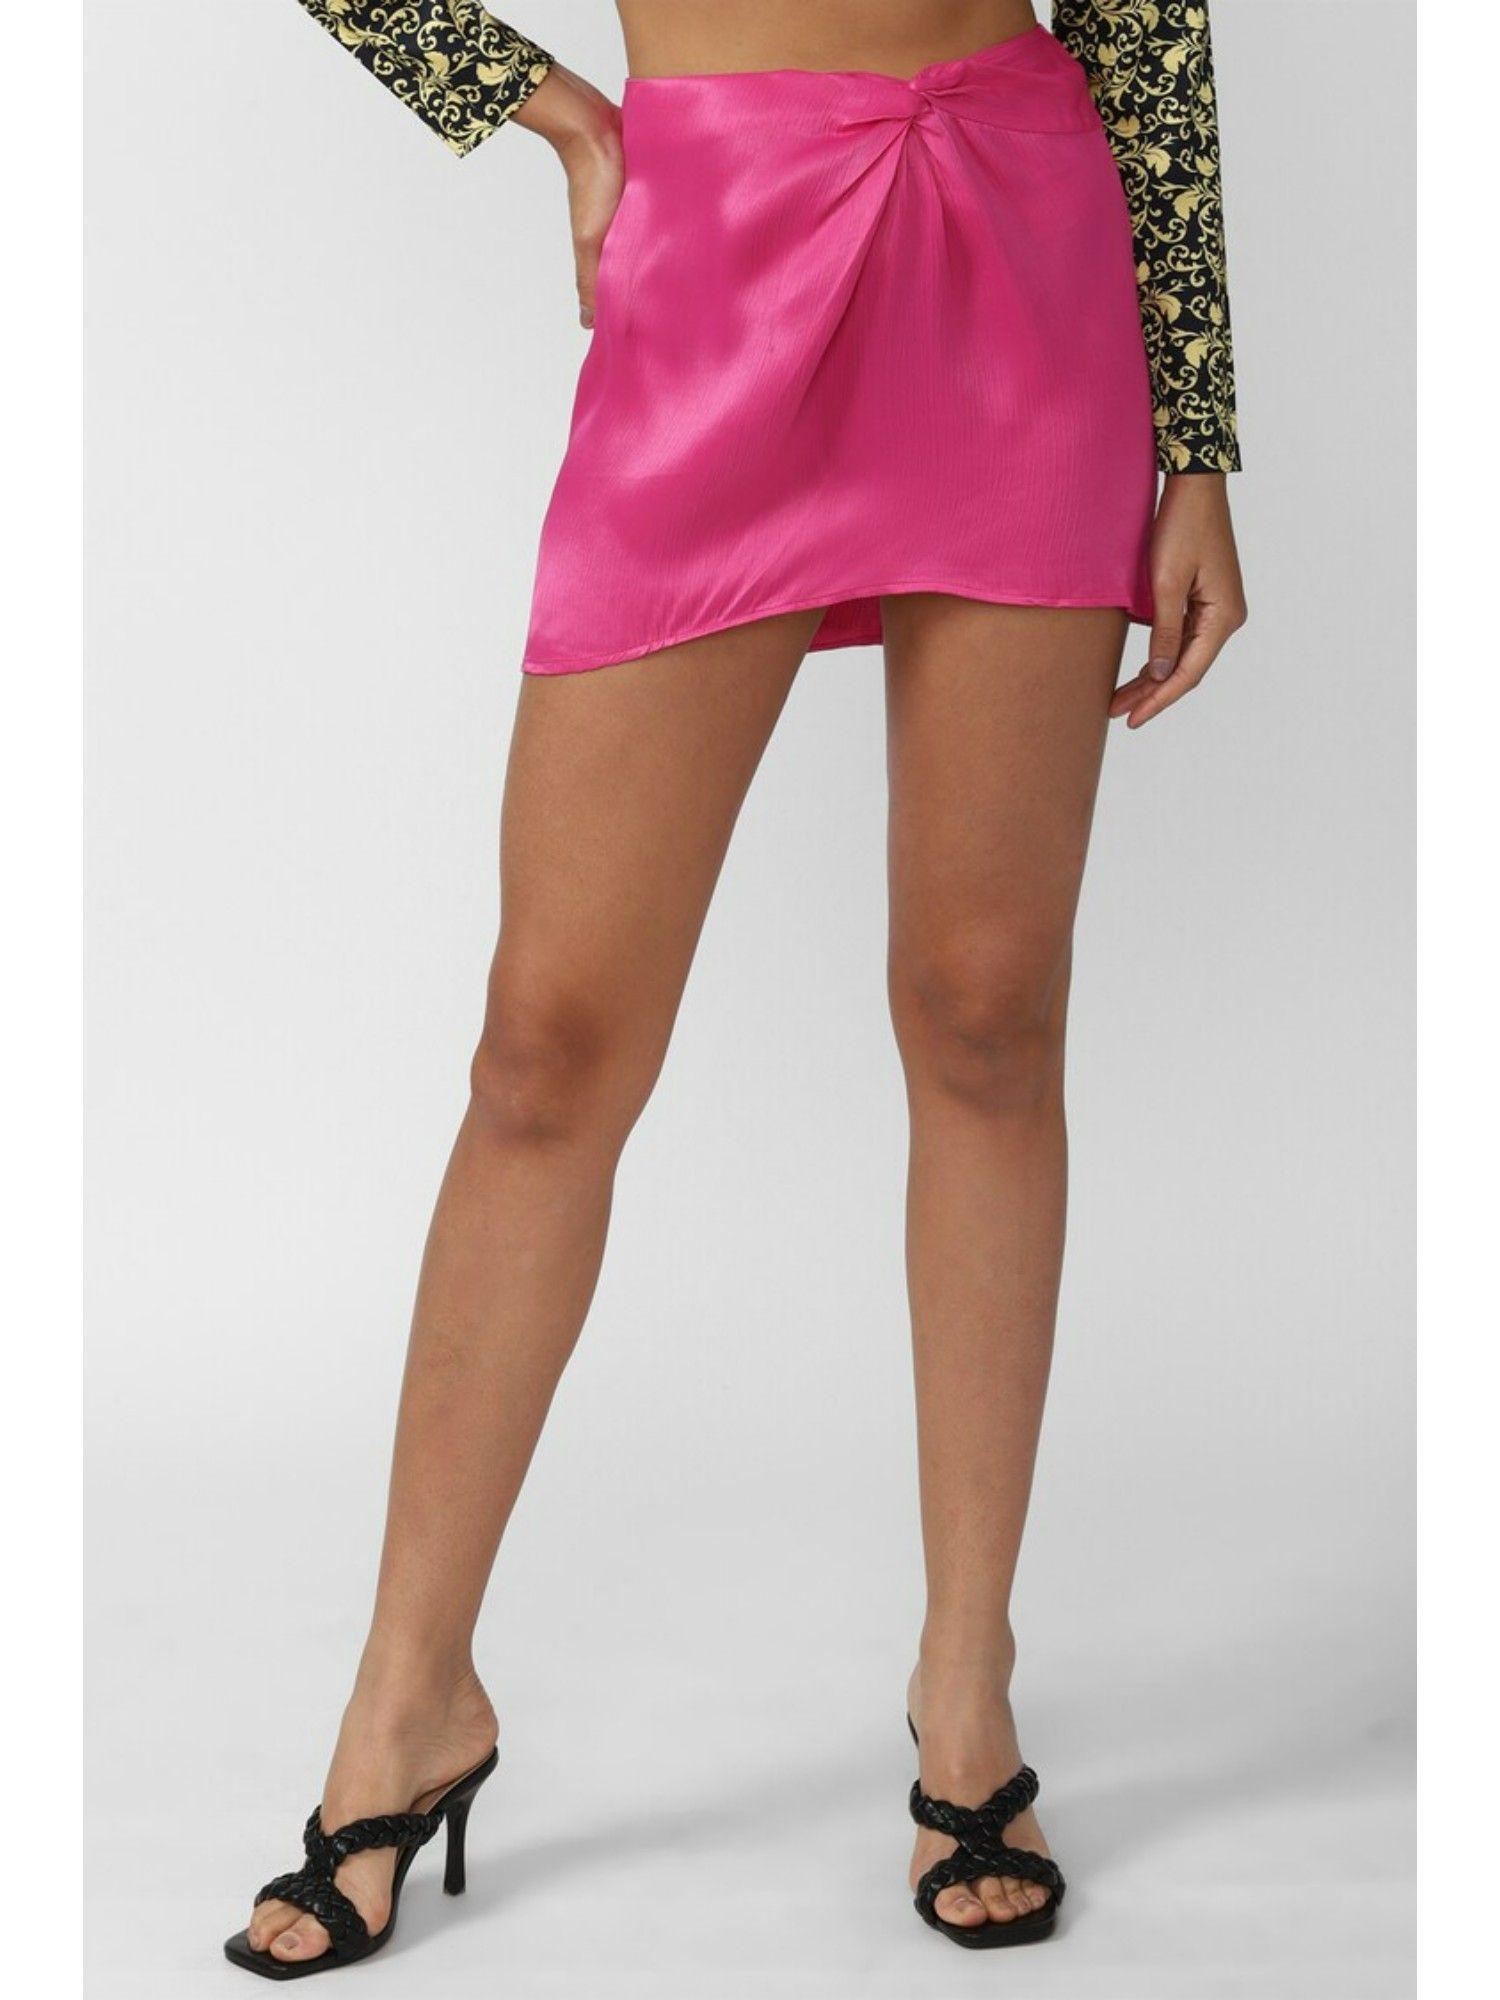 solid pink mini skirt